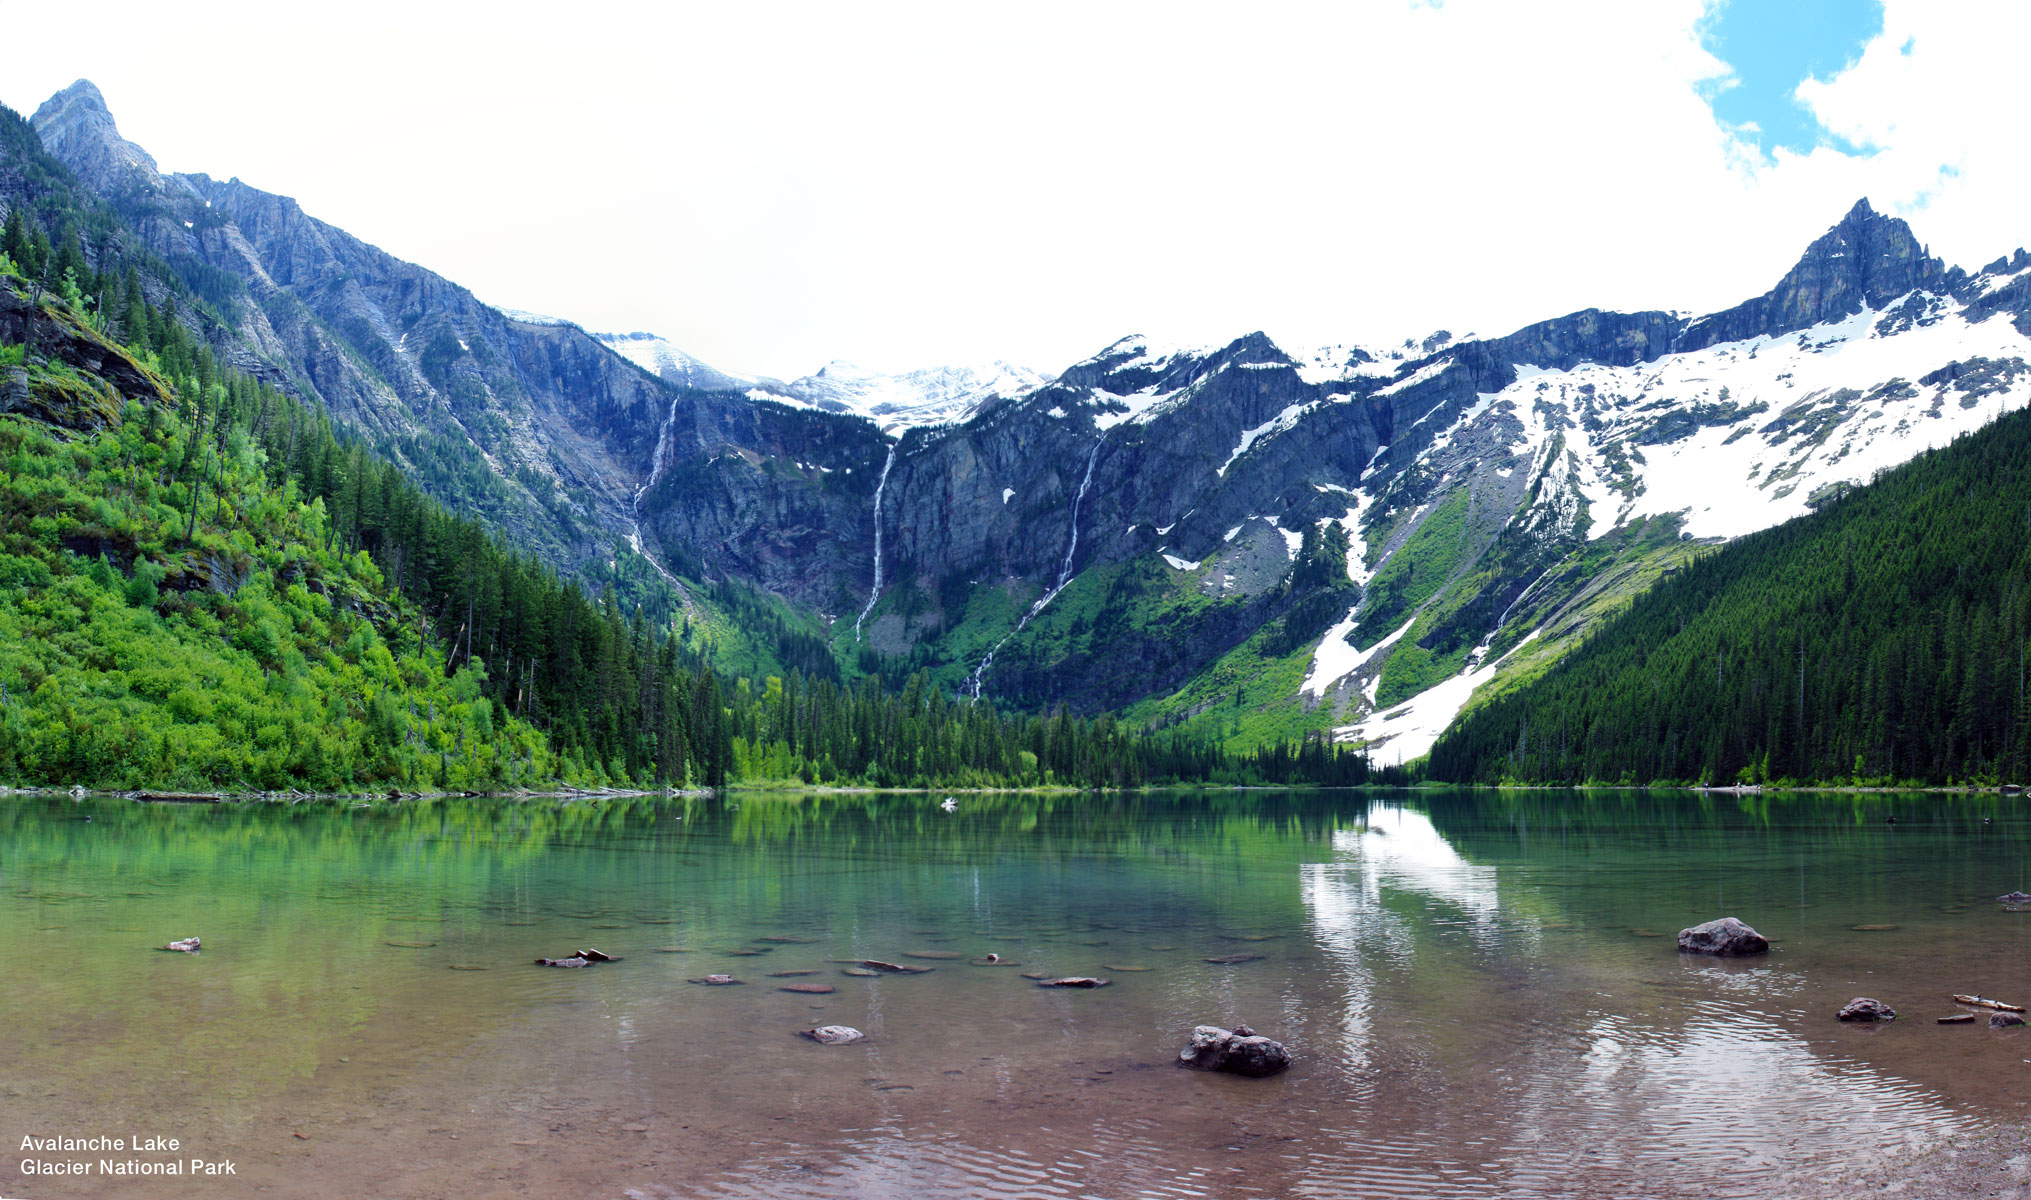 Avalanche Lake at Glacier National Park